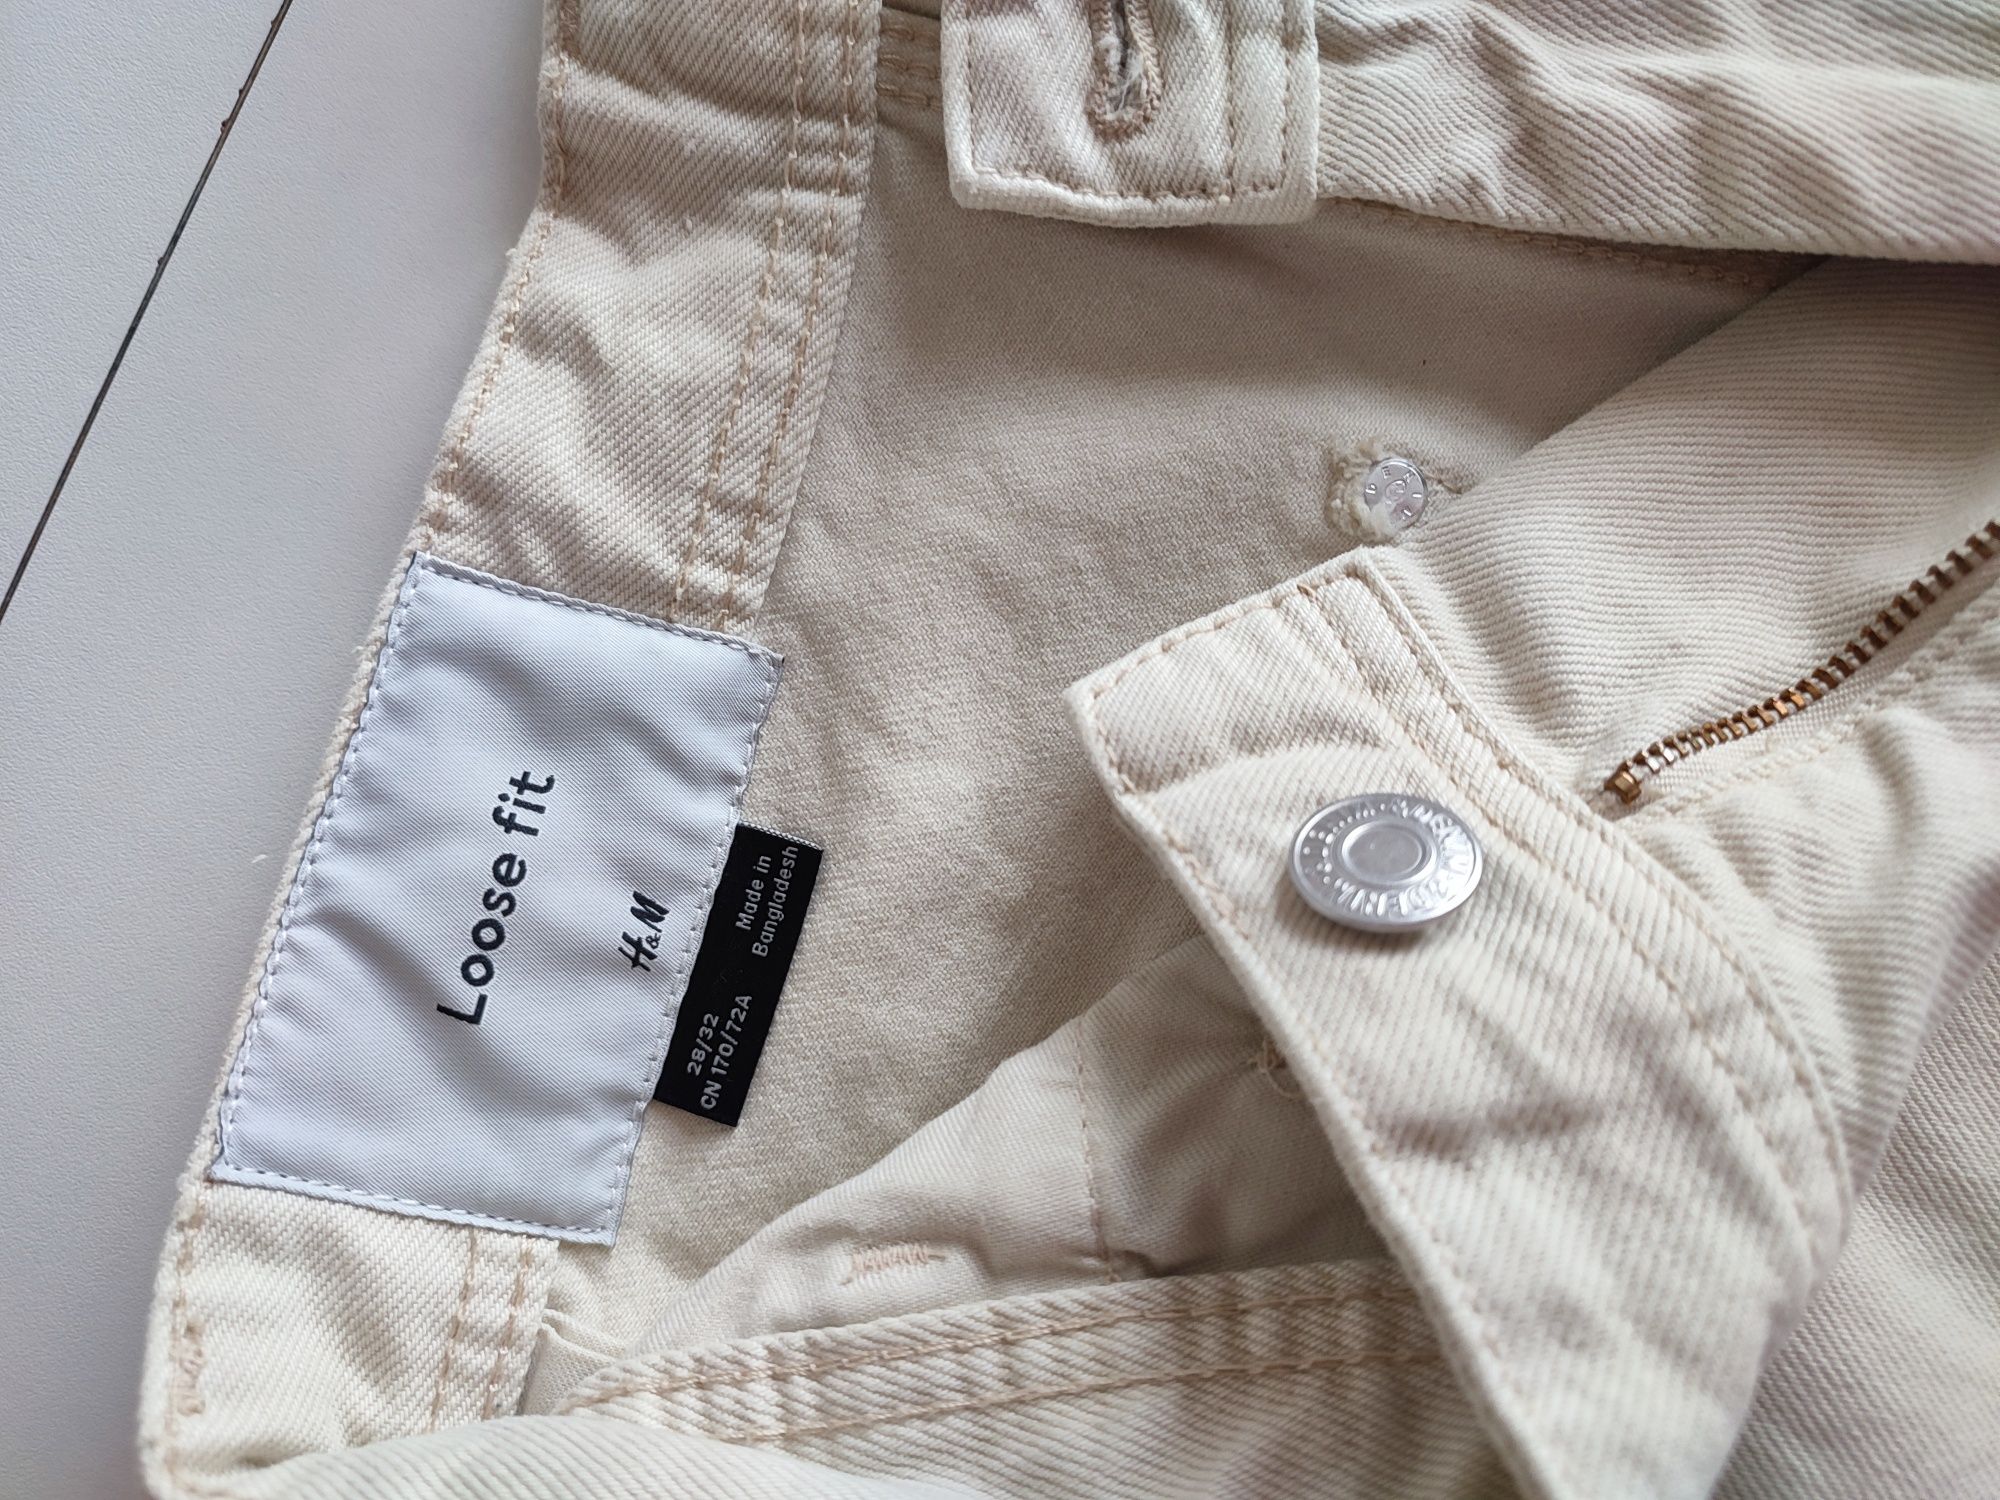 Nowe piękne spodnie H&M Loose Fit, rozm 28/32